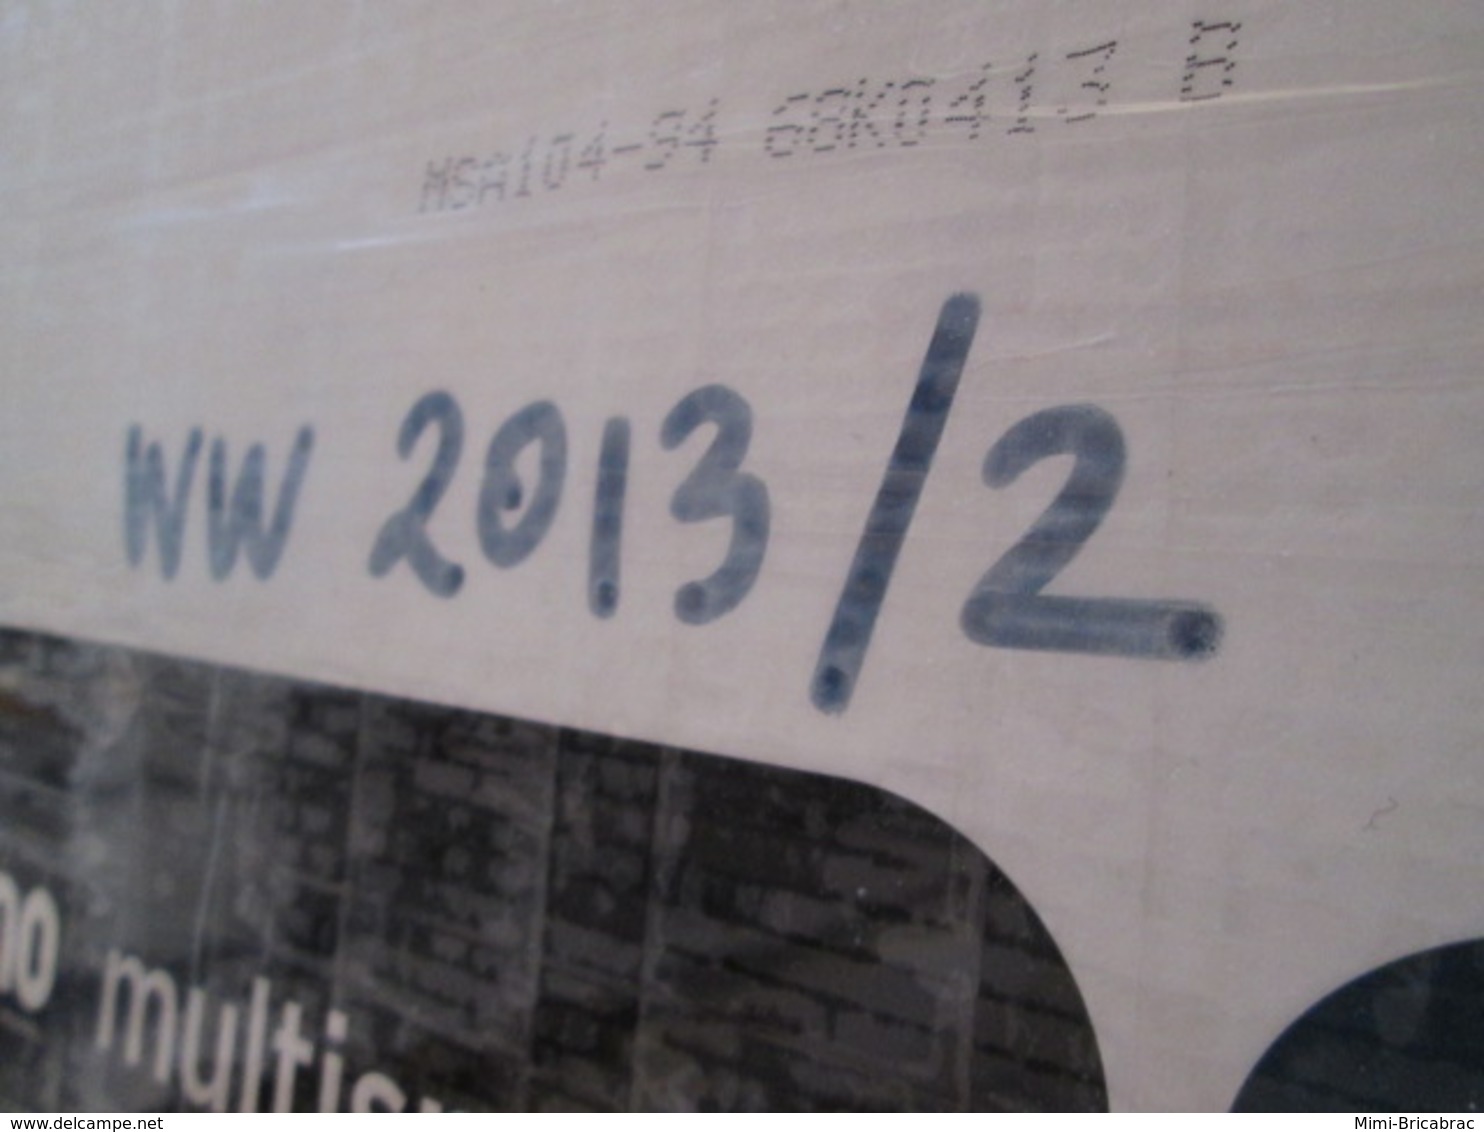 WW2013-2 Revue maquettiste plastique / TAMIYA MODEL MAGAZINE n°66 de 2003 valait 5,40€ , sommaire en photo 2 ou 3